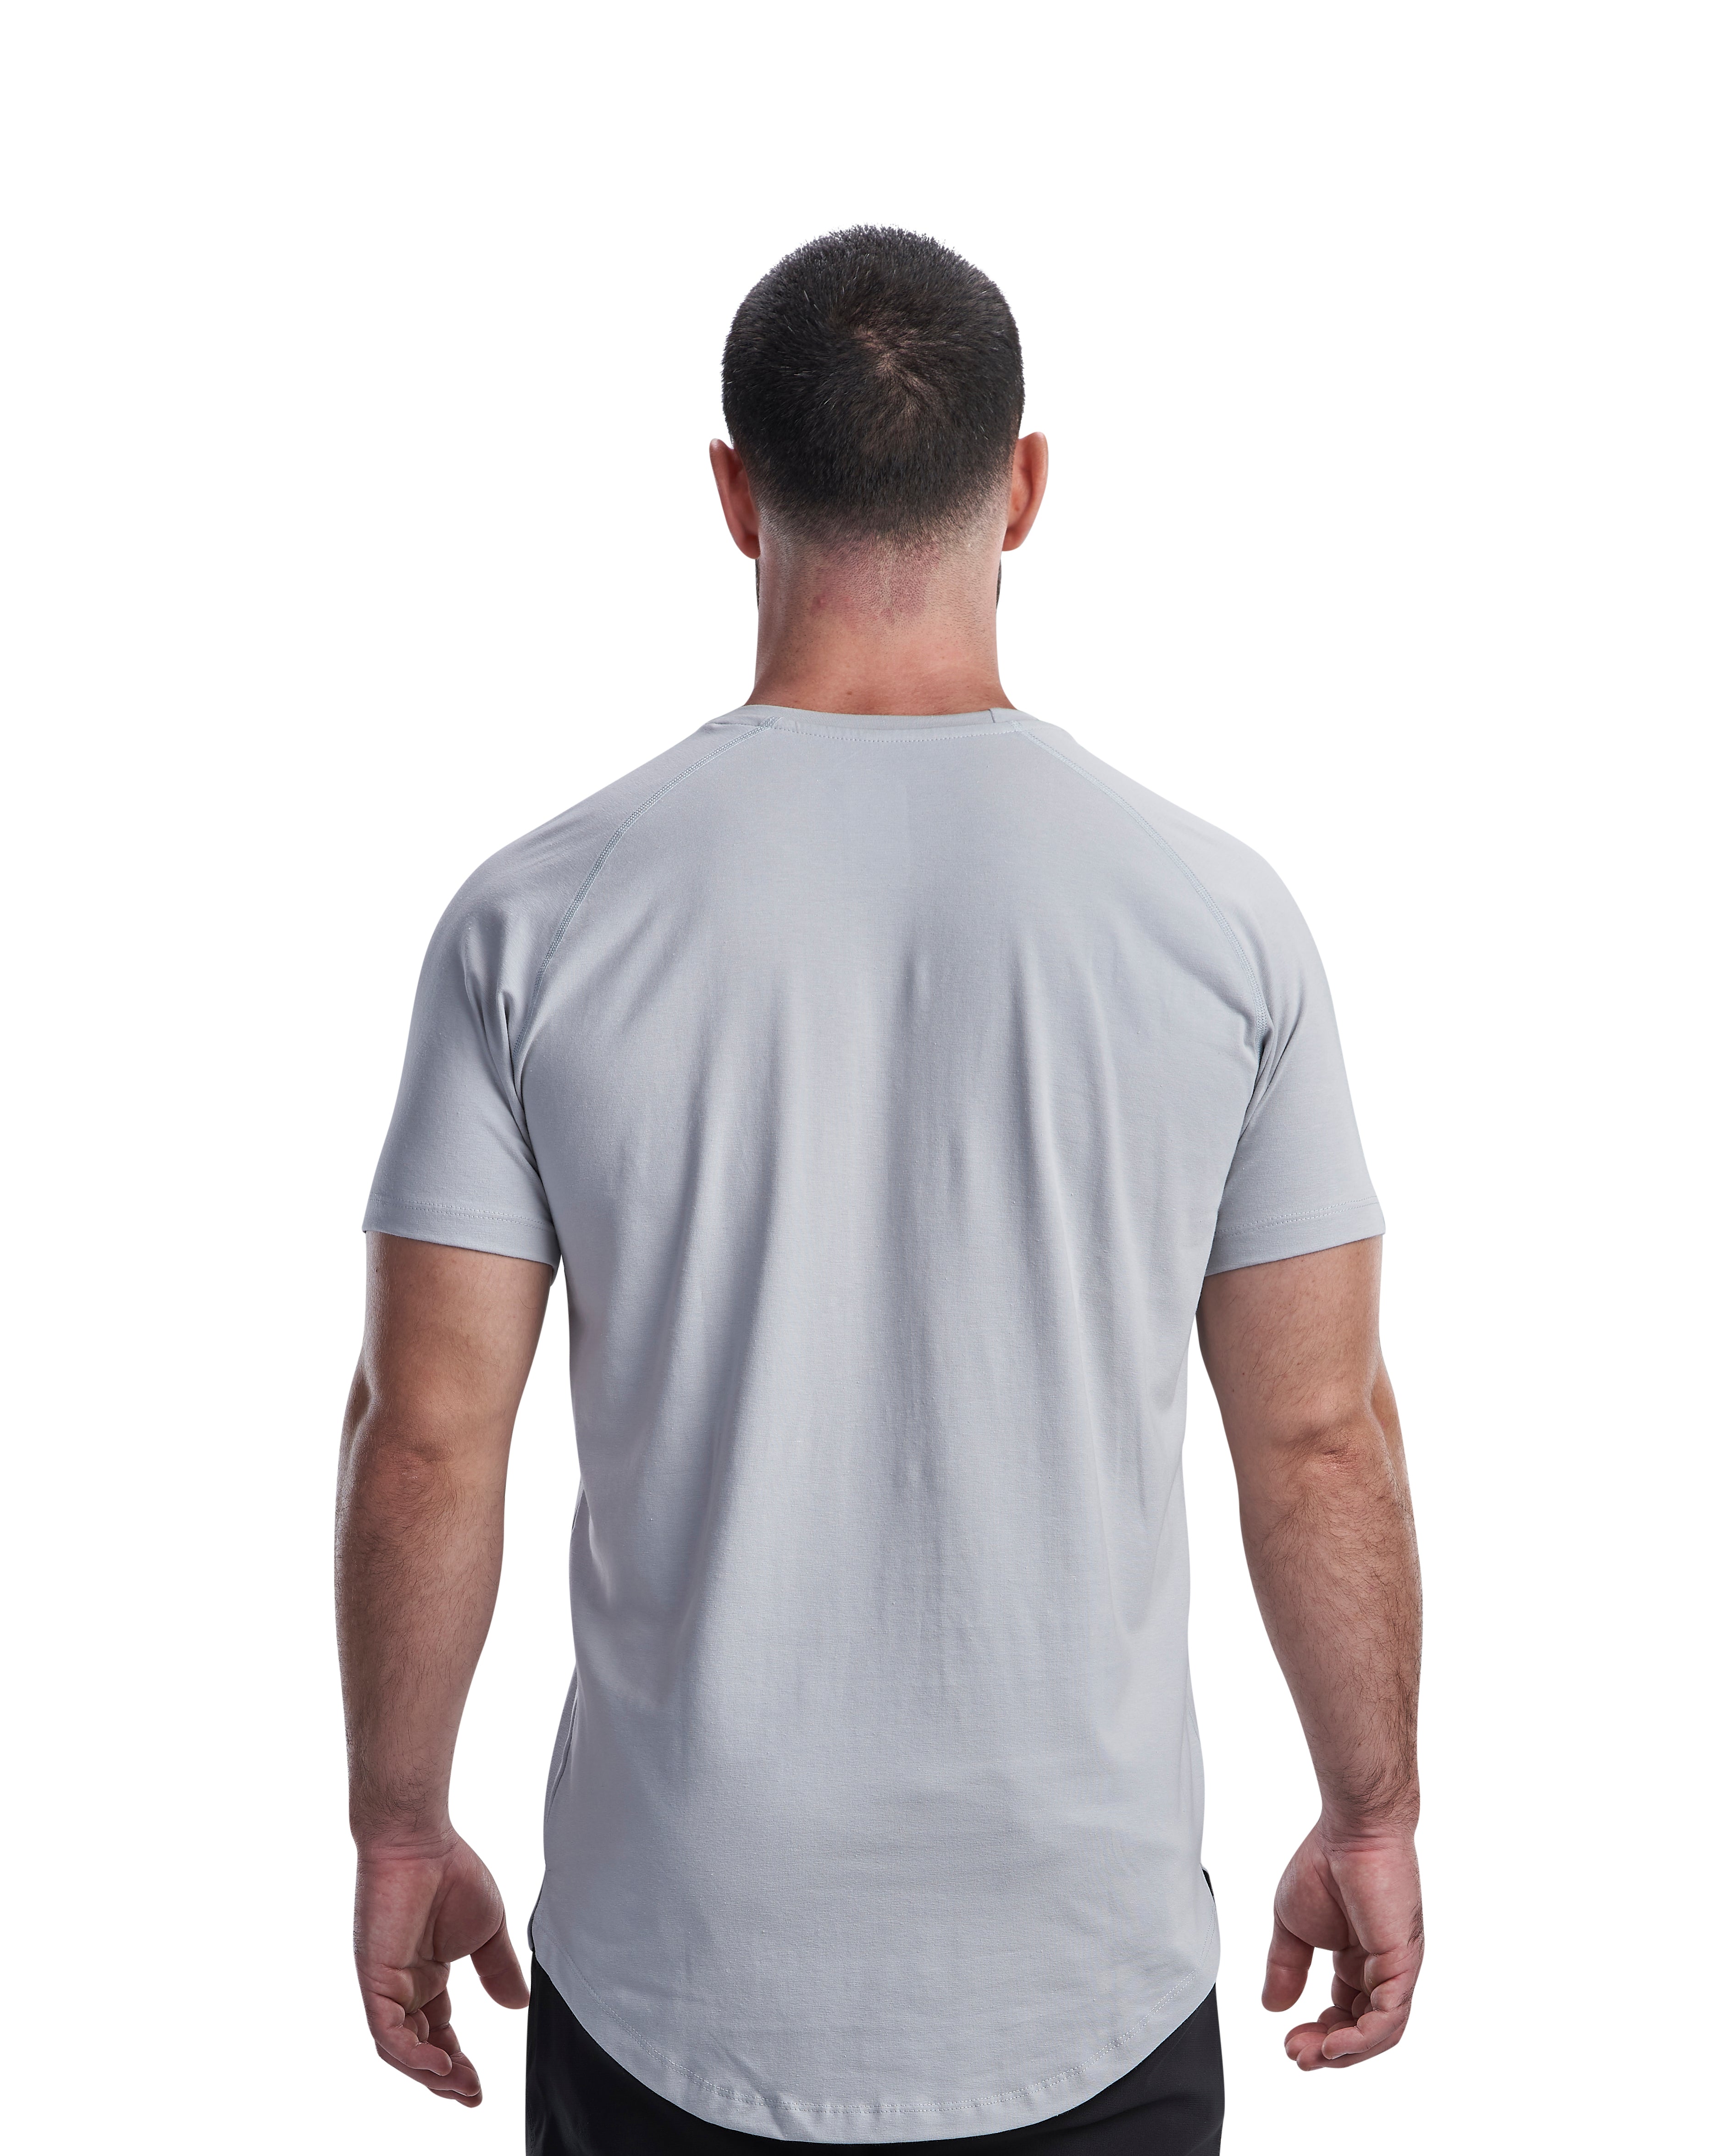 Bar-Basic Raglan T-shirt [Cotton/Lycra] - T-Shirt - Gym Apparel Egypt